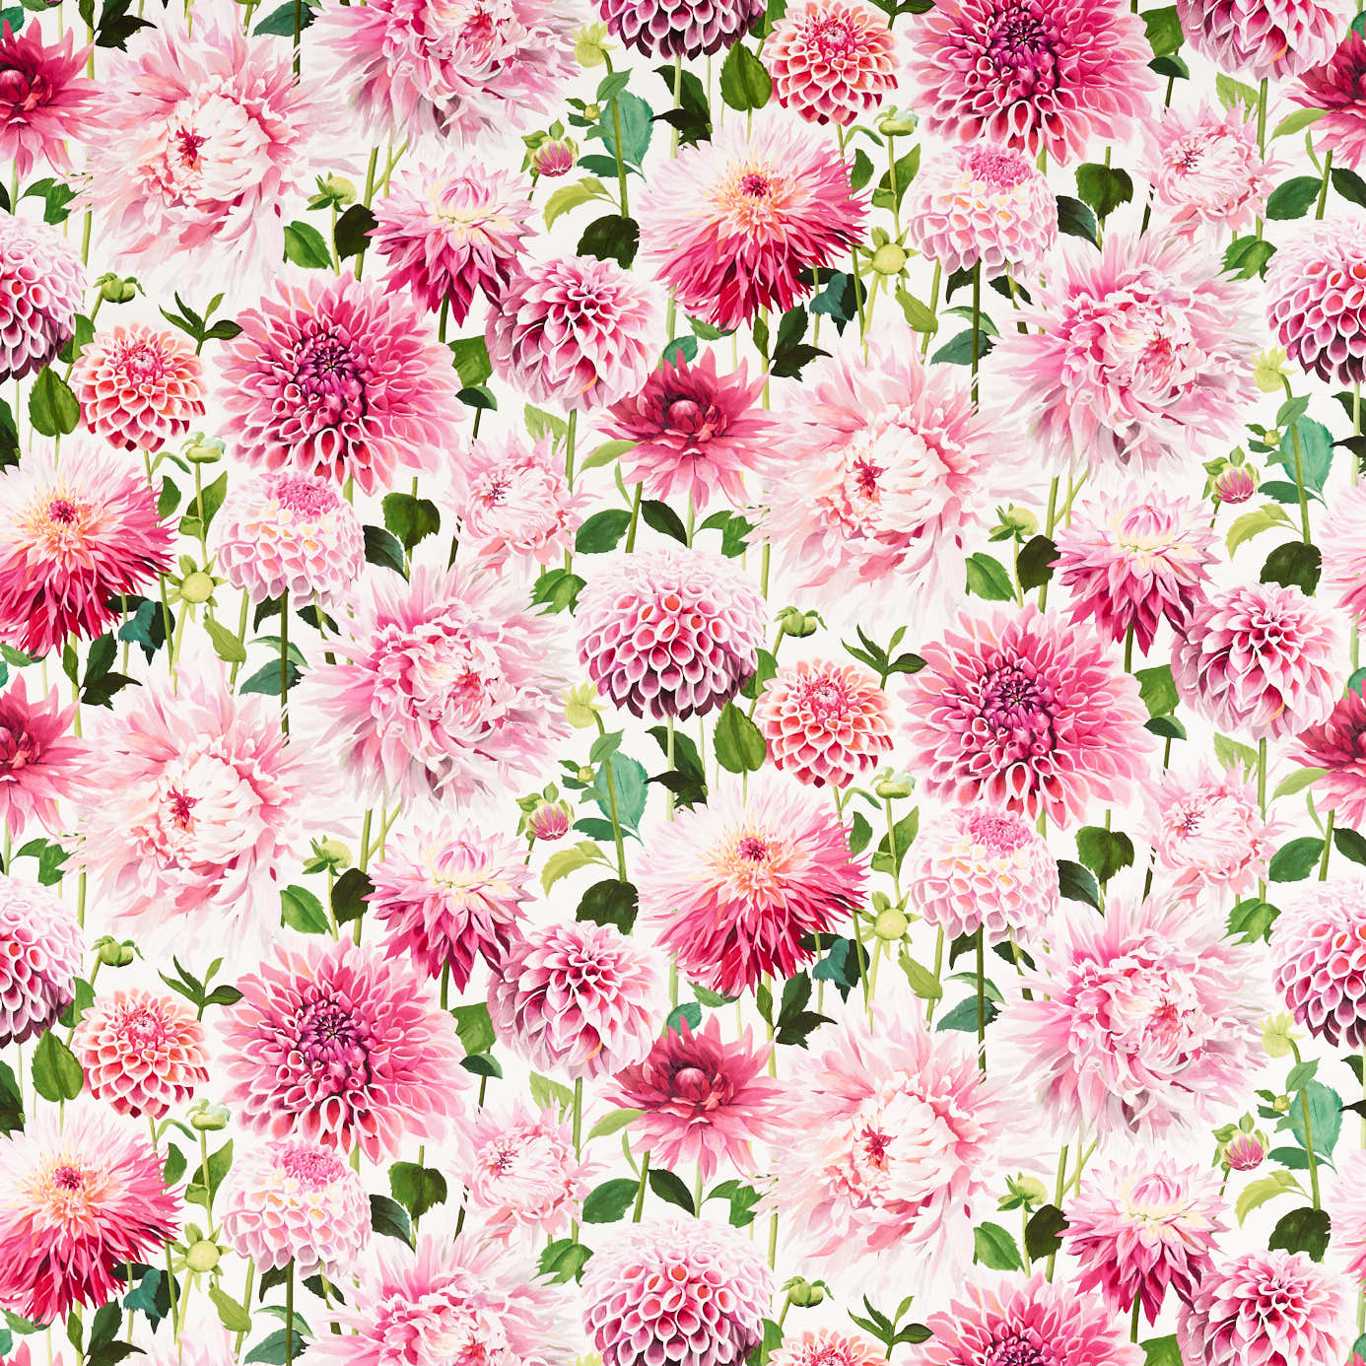 Dahlia Blossom/Emerald/New Beginnings Fabric by HAR